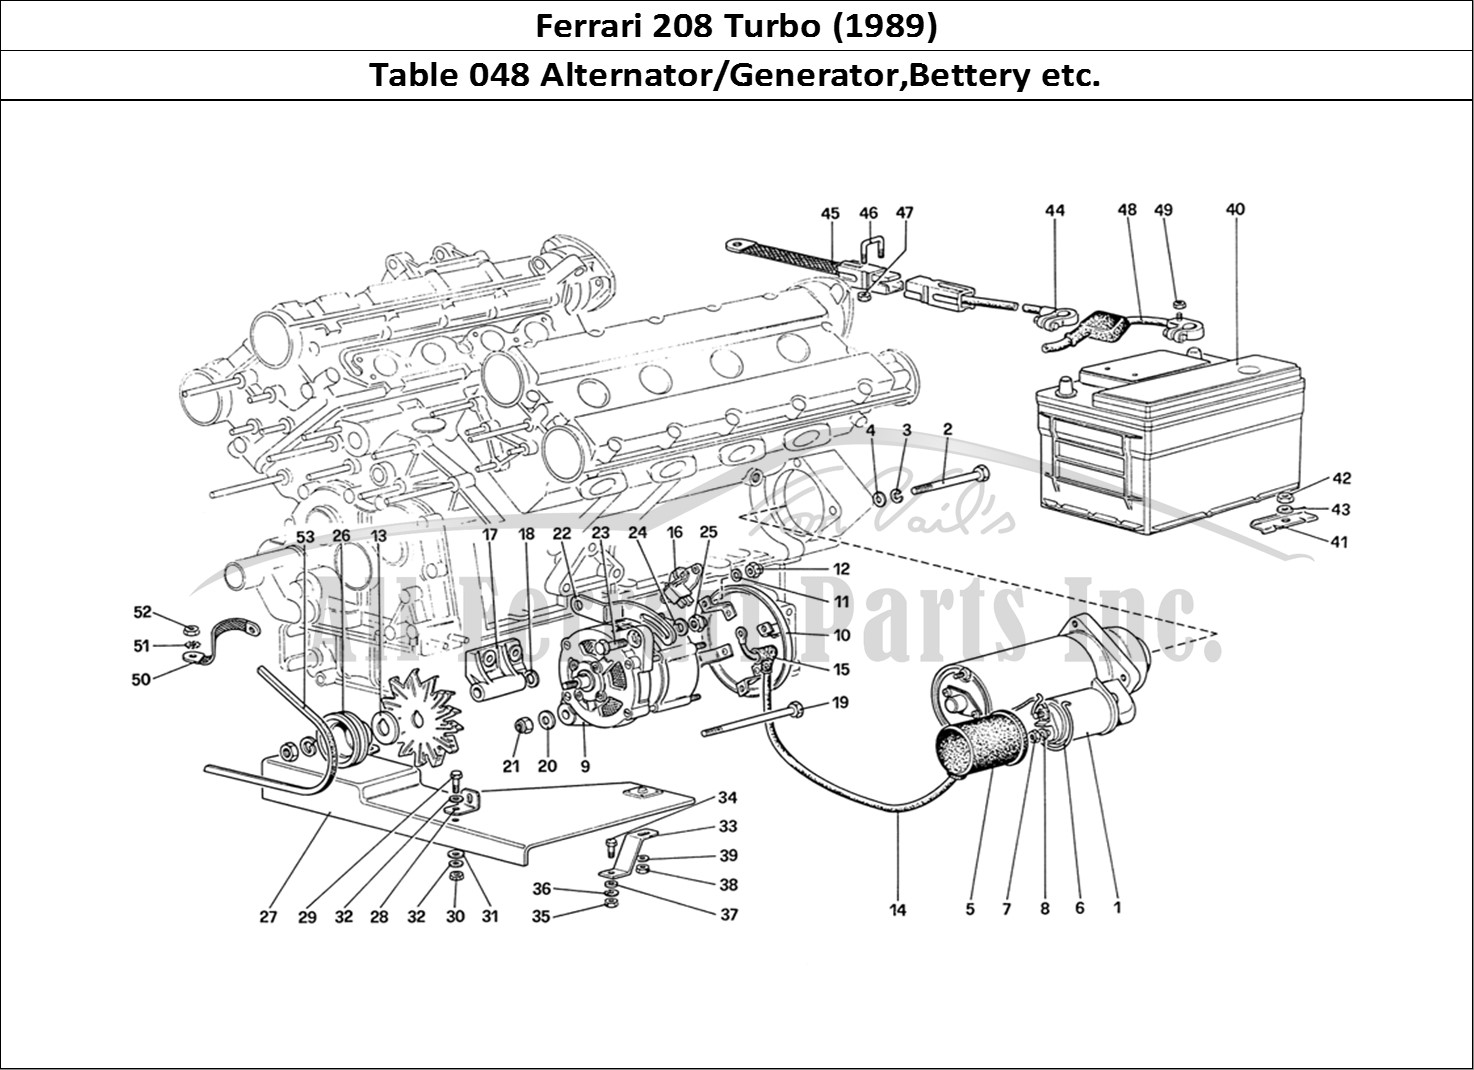 Ferrari Parts Ferrari 208 Turbo (1989) Page 048 Electric Generating Syste